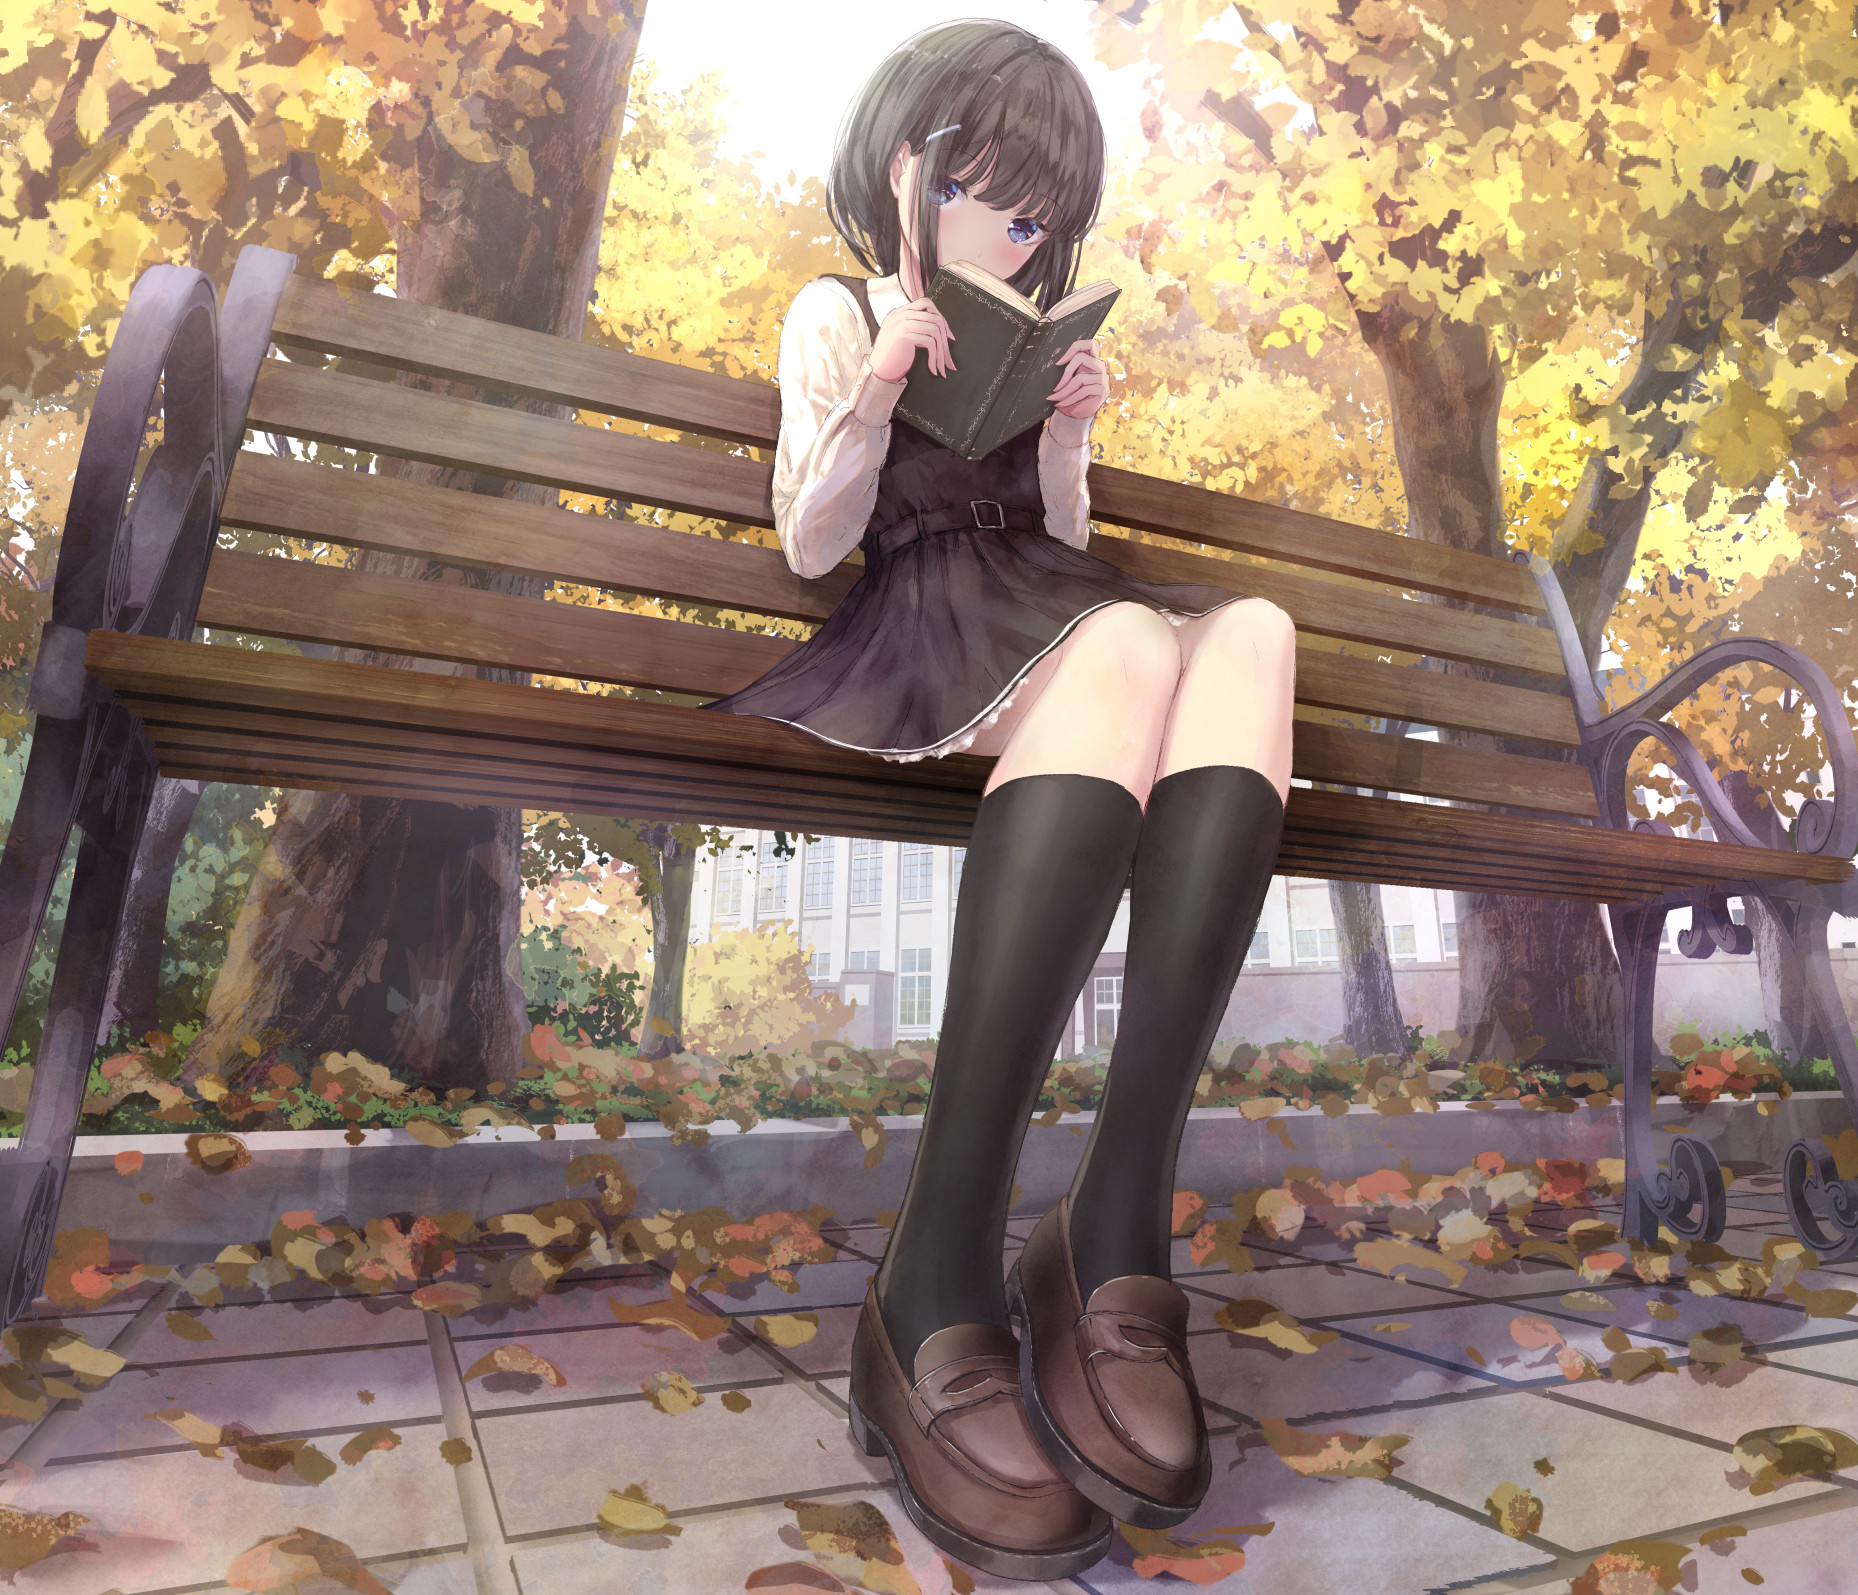 Forest Park Bench Anime Backgrounds 02 Stock Illustration 2211139979 |  Shutterstock